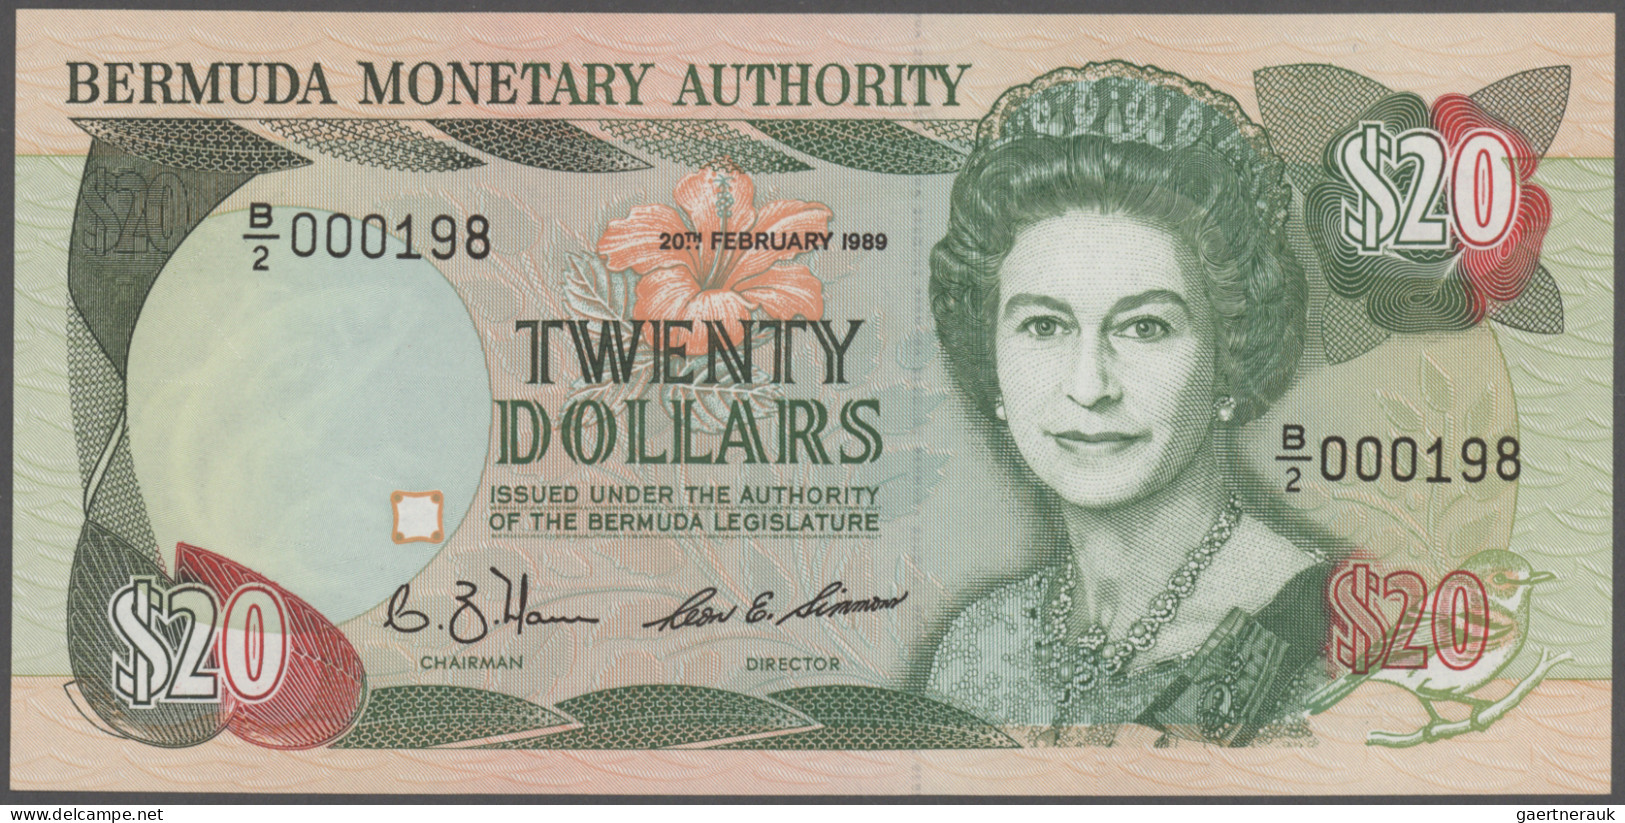 Bermuda: Bermuda Monetary Authority 20 Dollars 1989 With Low Serial # B/2 000198 - Bermude